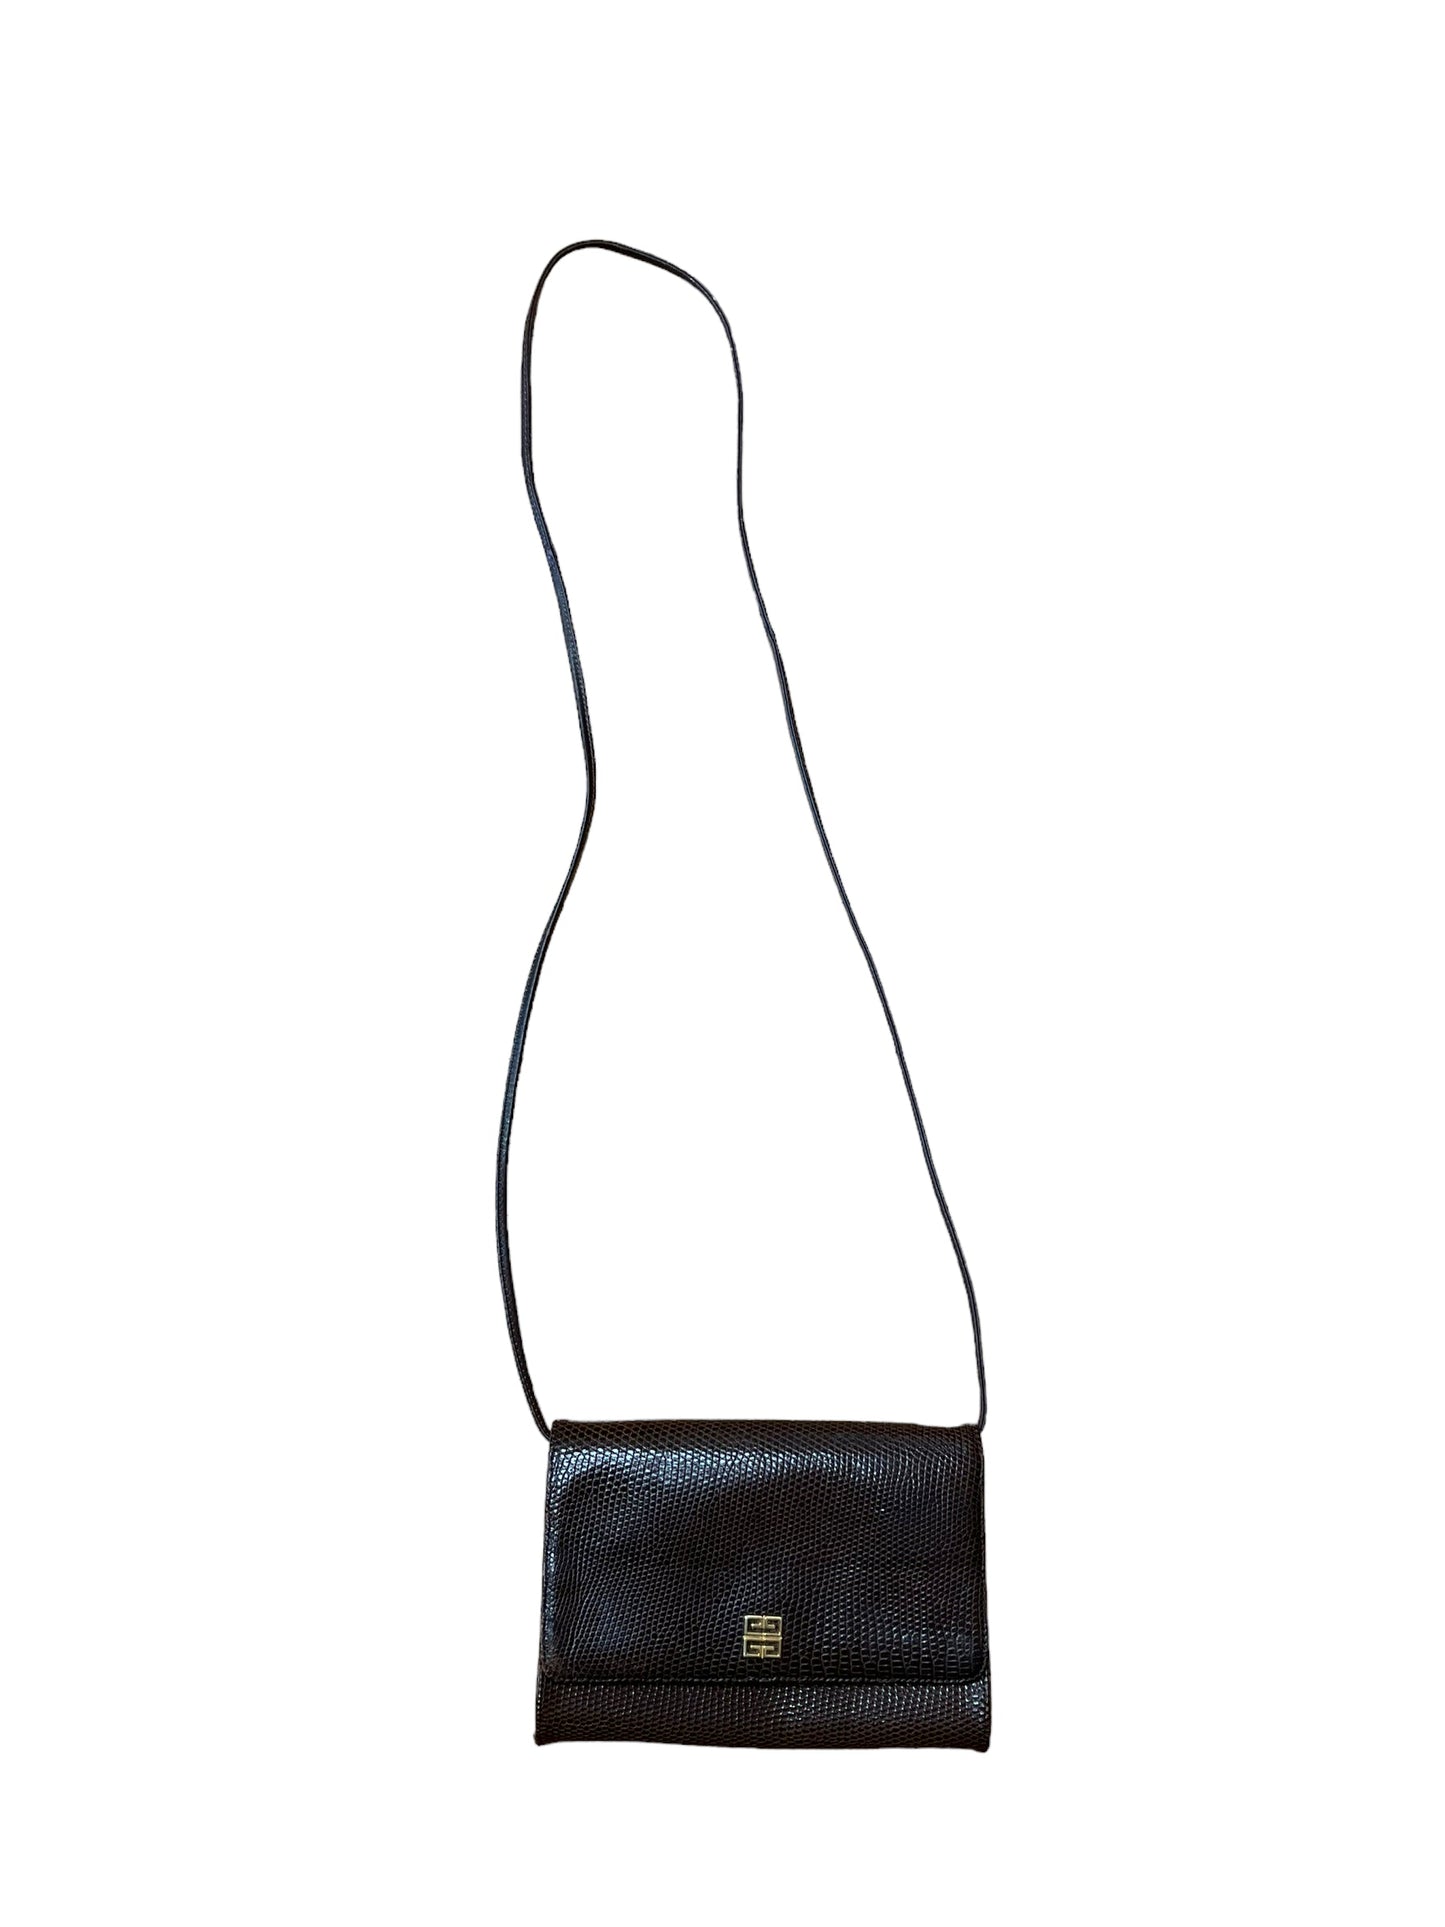 Handbag Luxury Designer By Givenchy  Size: Small